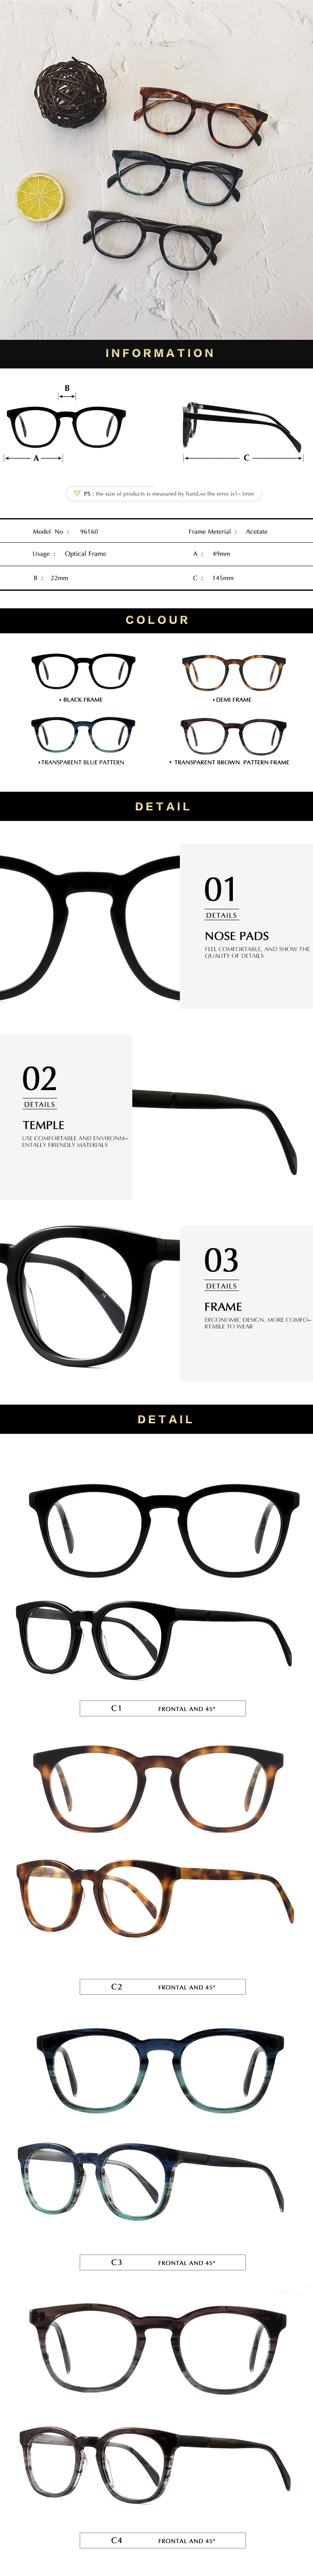 Acetate Optical Glasses Frame